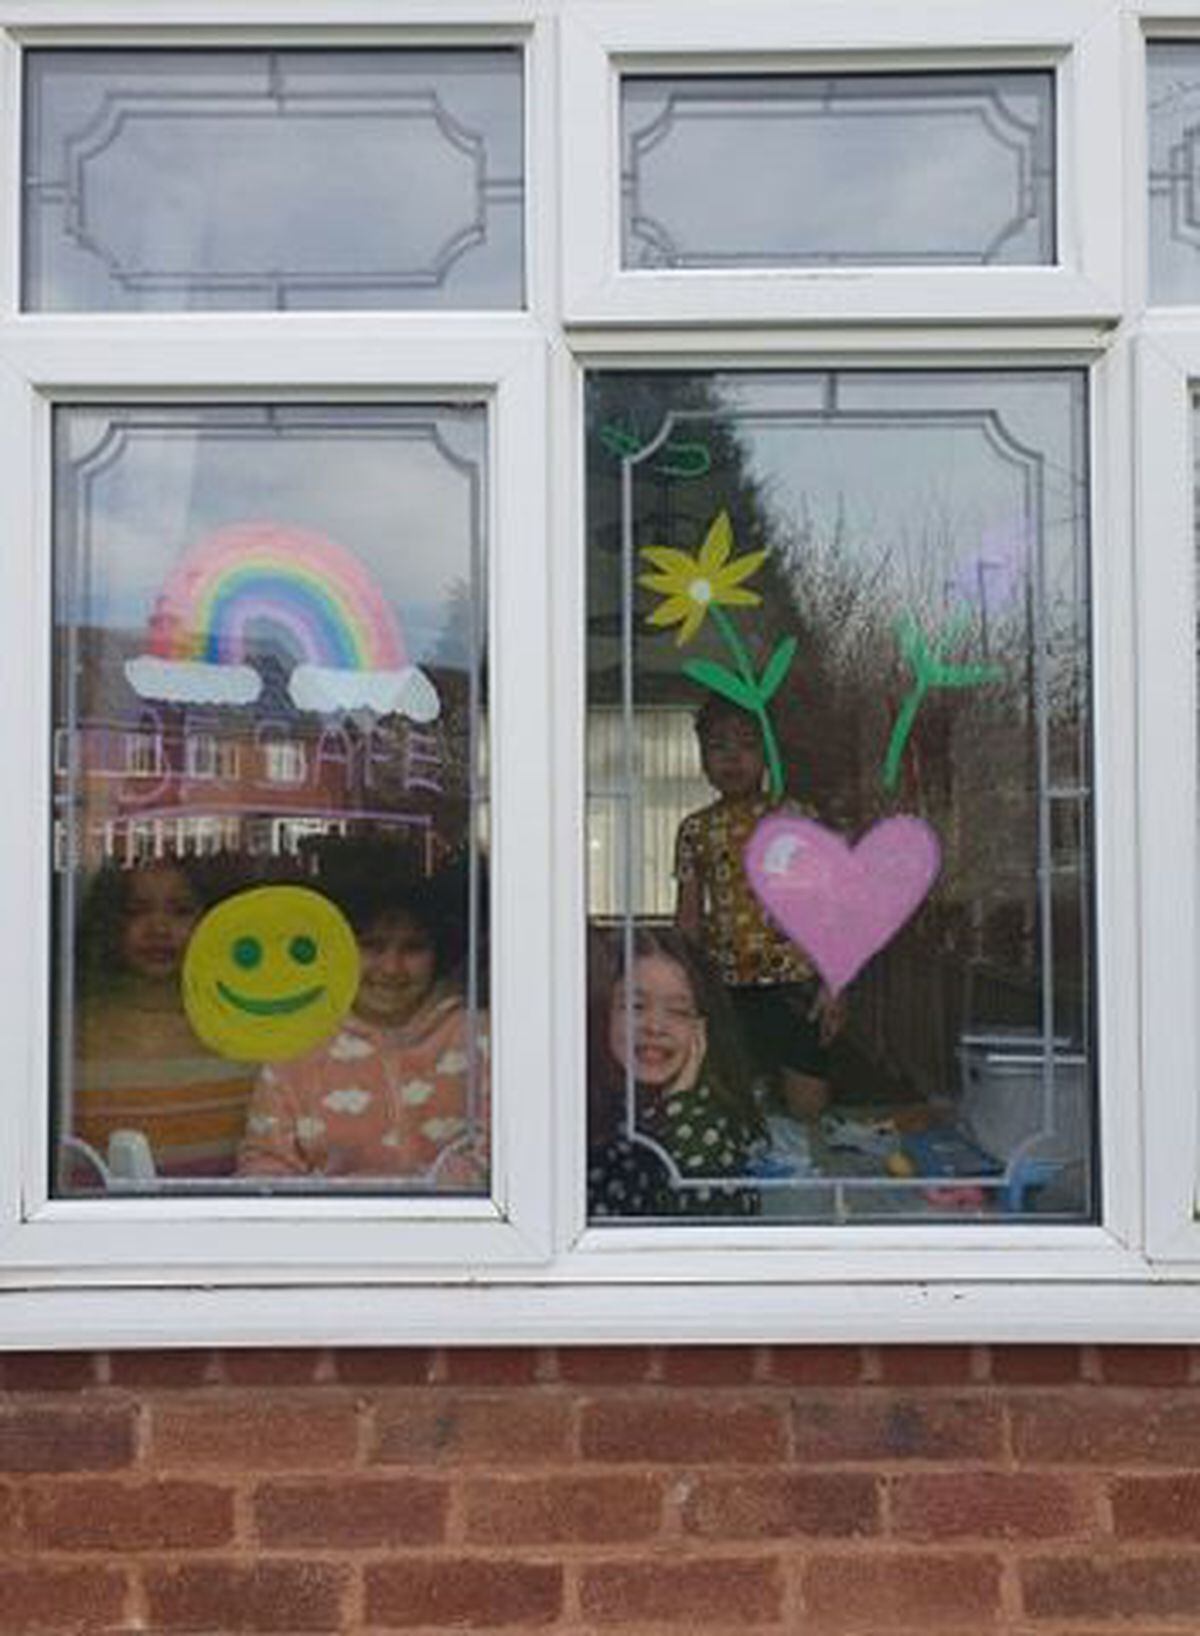 Ava, Maycee Cheyenne and Izaak with their rainbows in Northycote, Wolverhampton